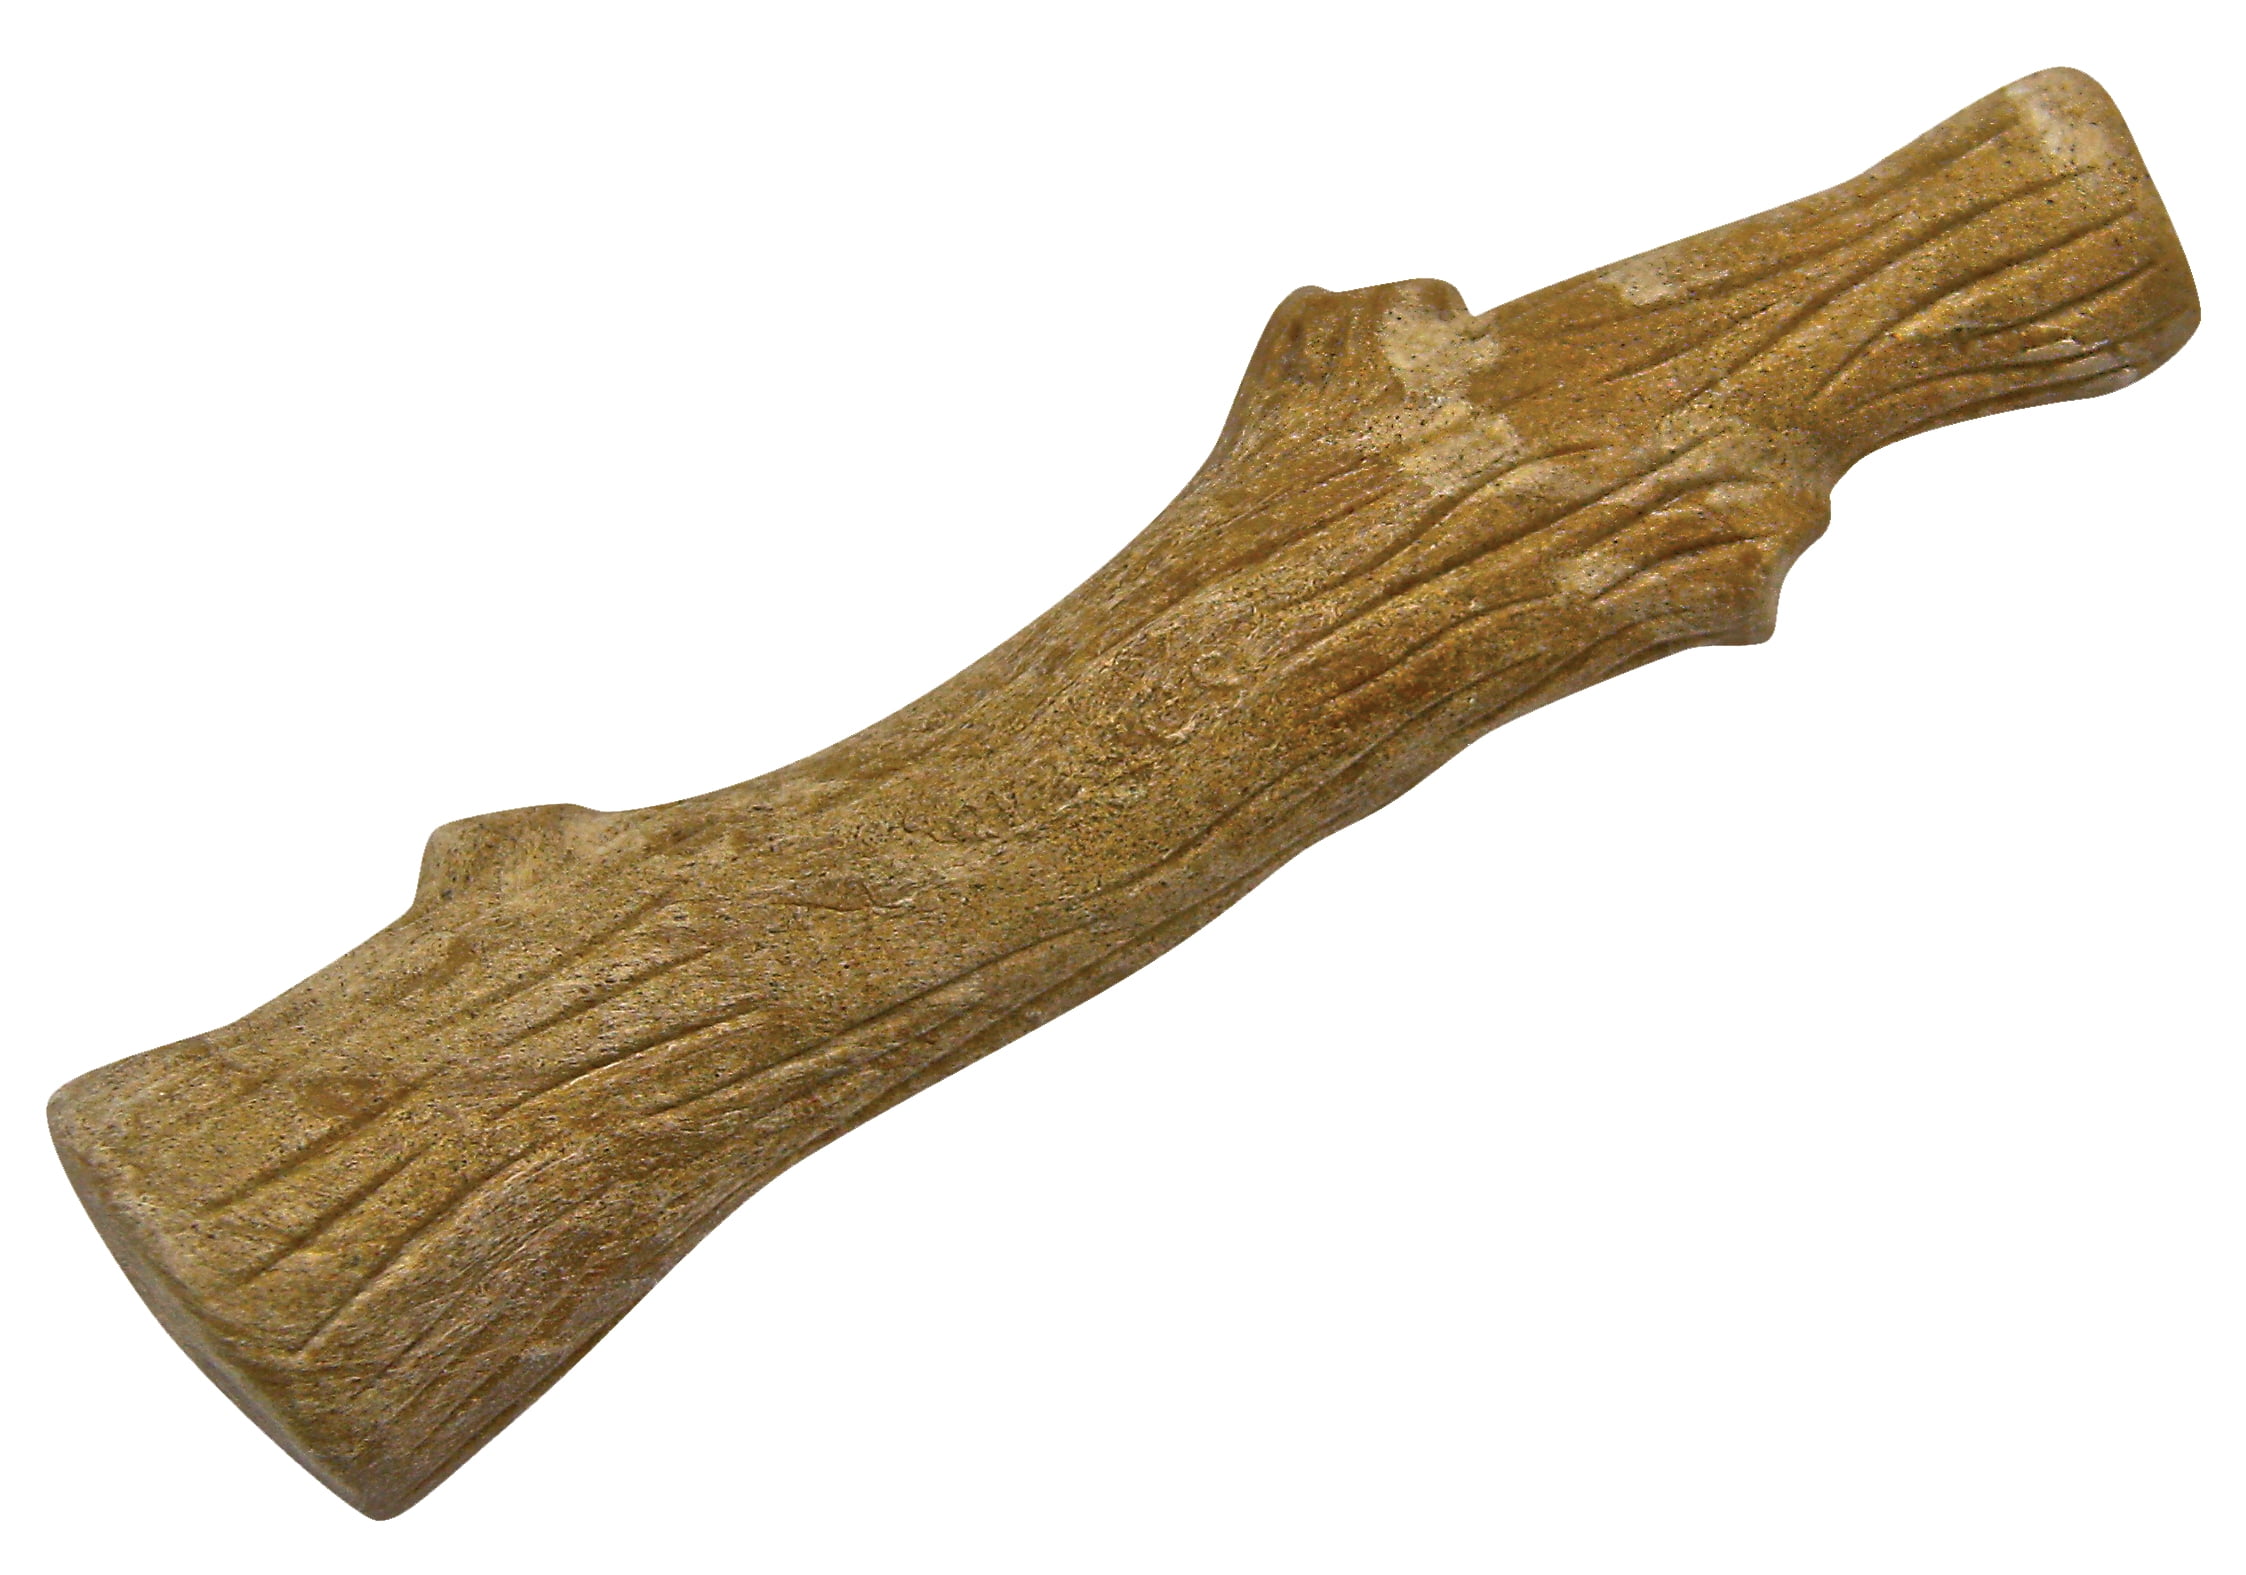 Dogwood Wood Alternative Dog Chew Toy, Original